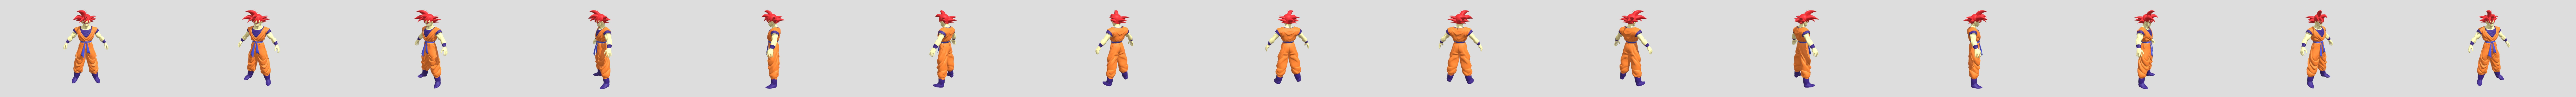 Goku Super Saiyan God - Download Free 3D model by Justin Rajan  (@justin.rajan.6619) [46f81d2]